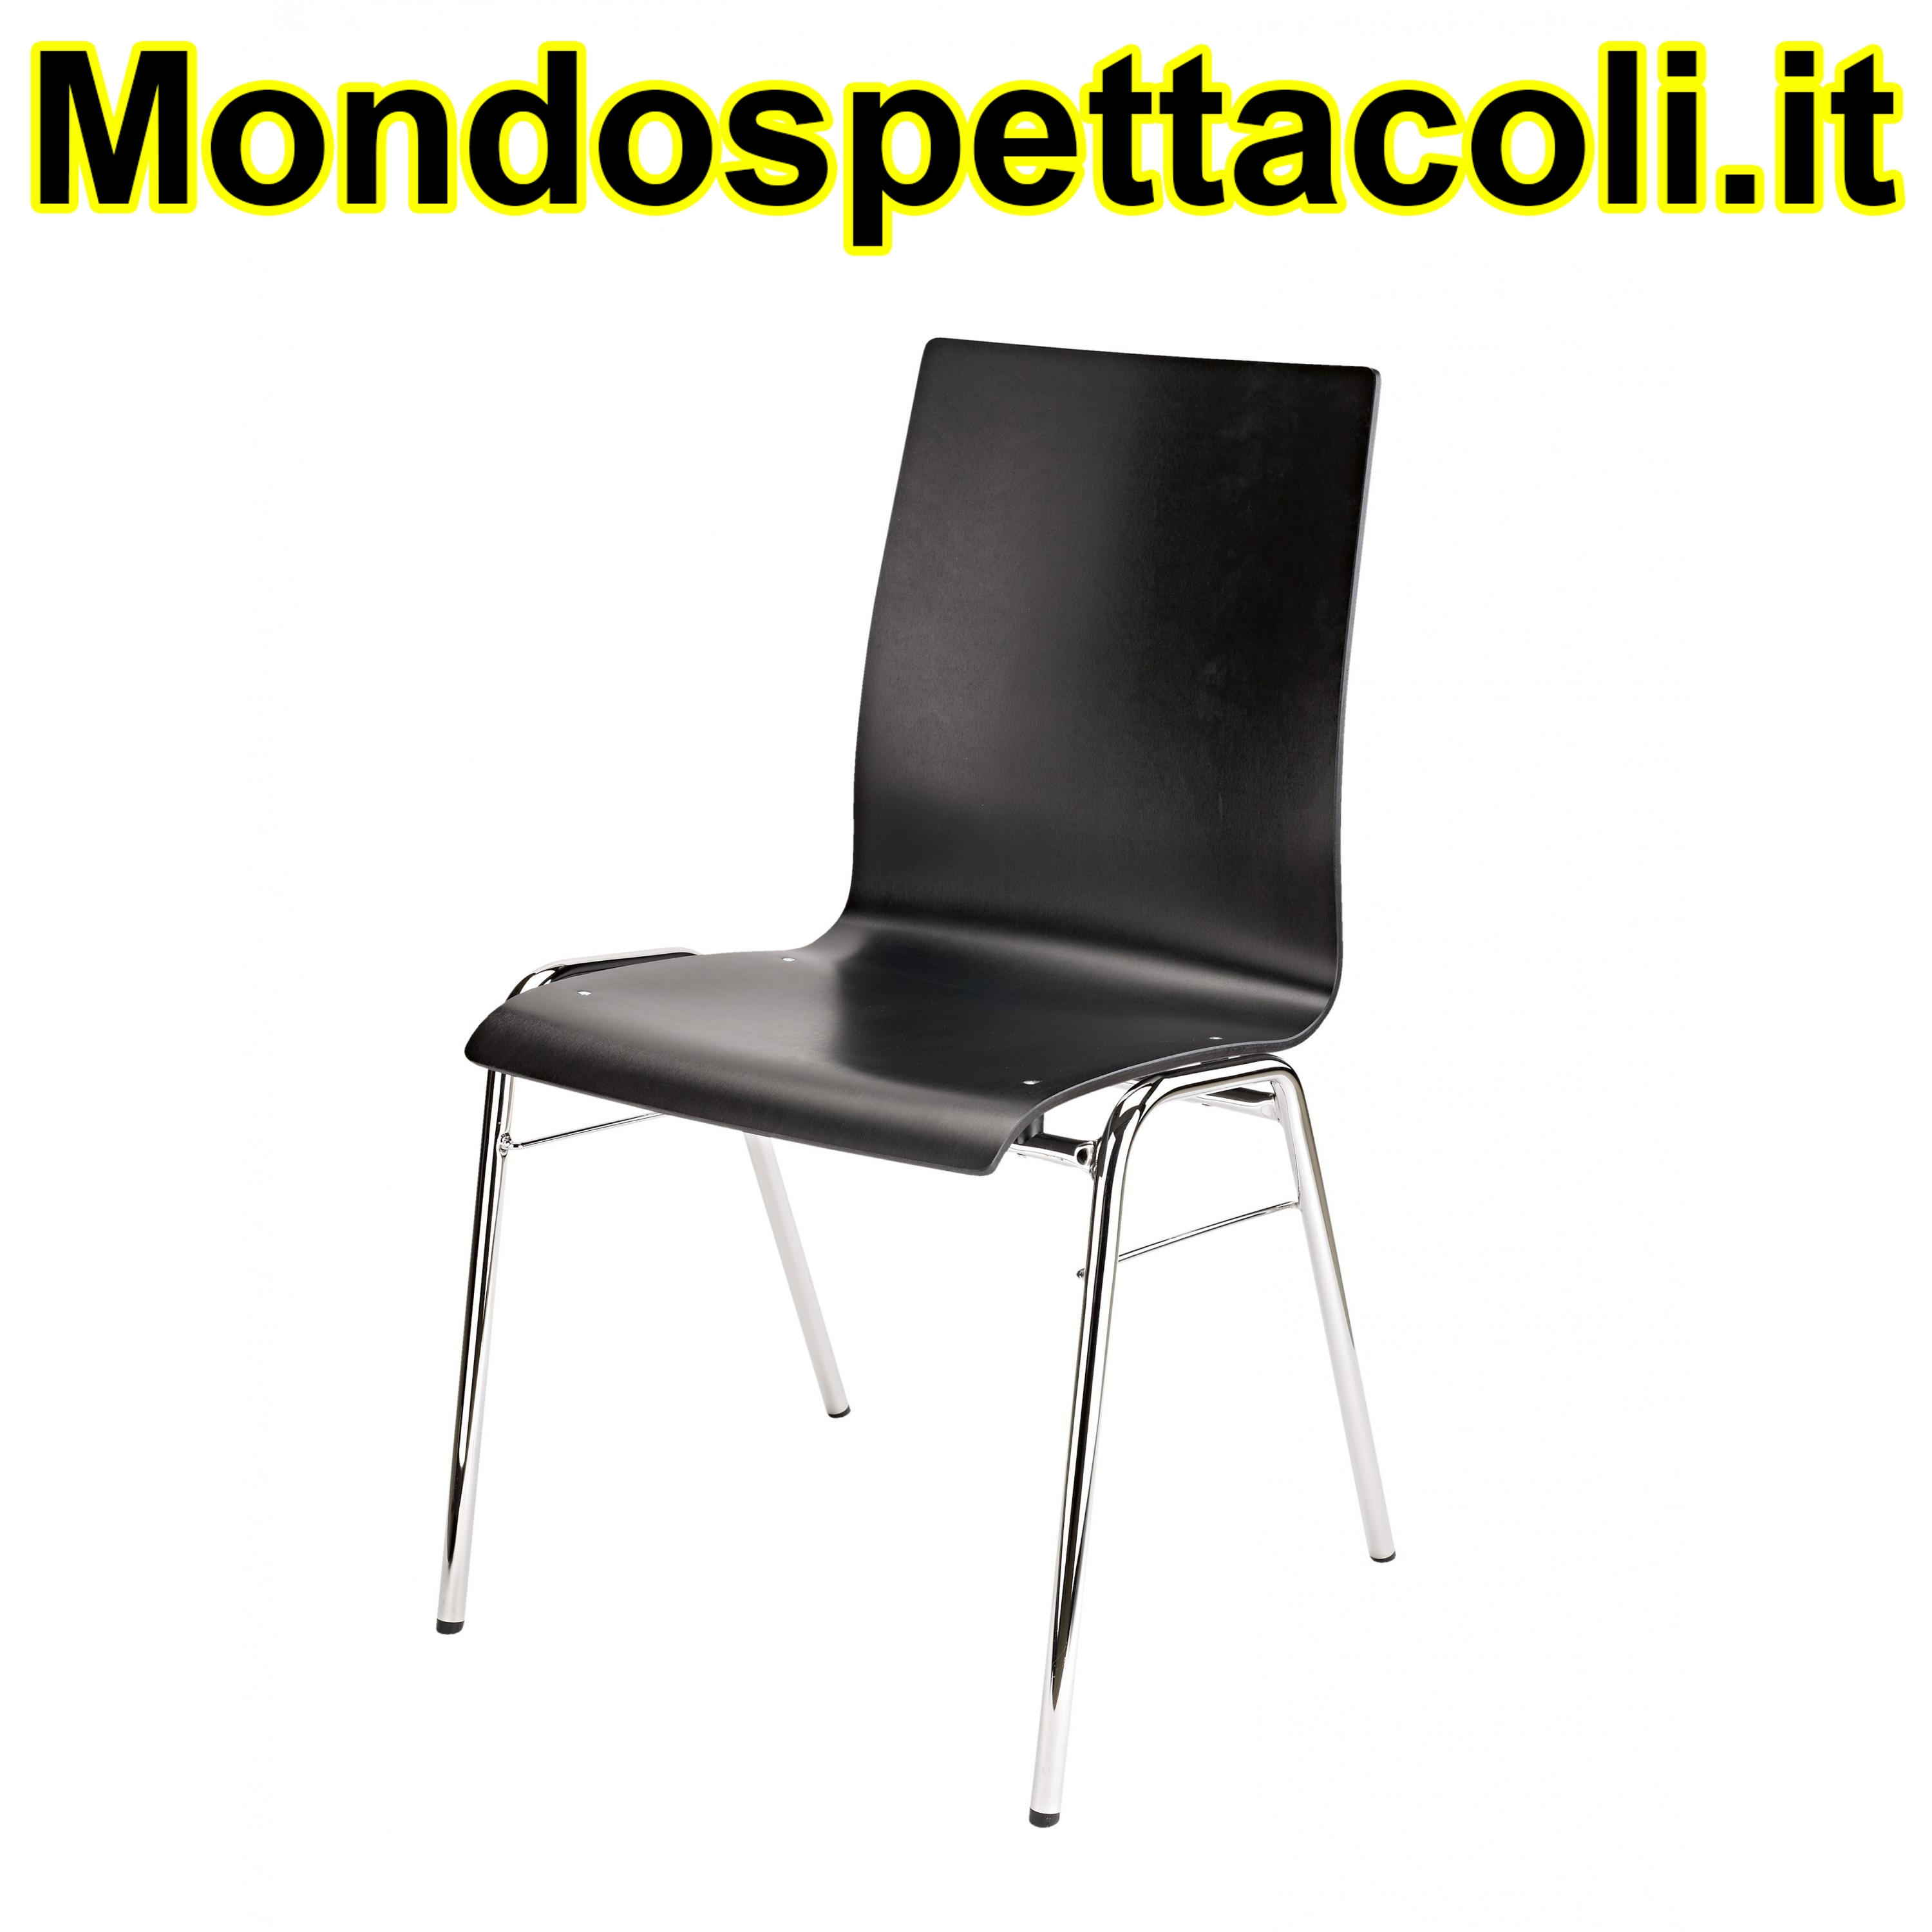 K&M legs chrome, seating black Stacking chair 13405-000-02